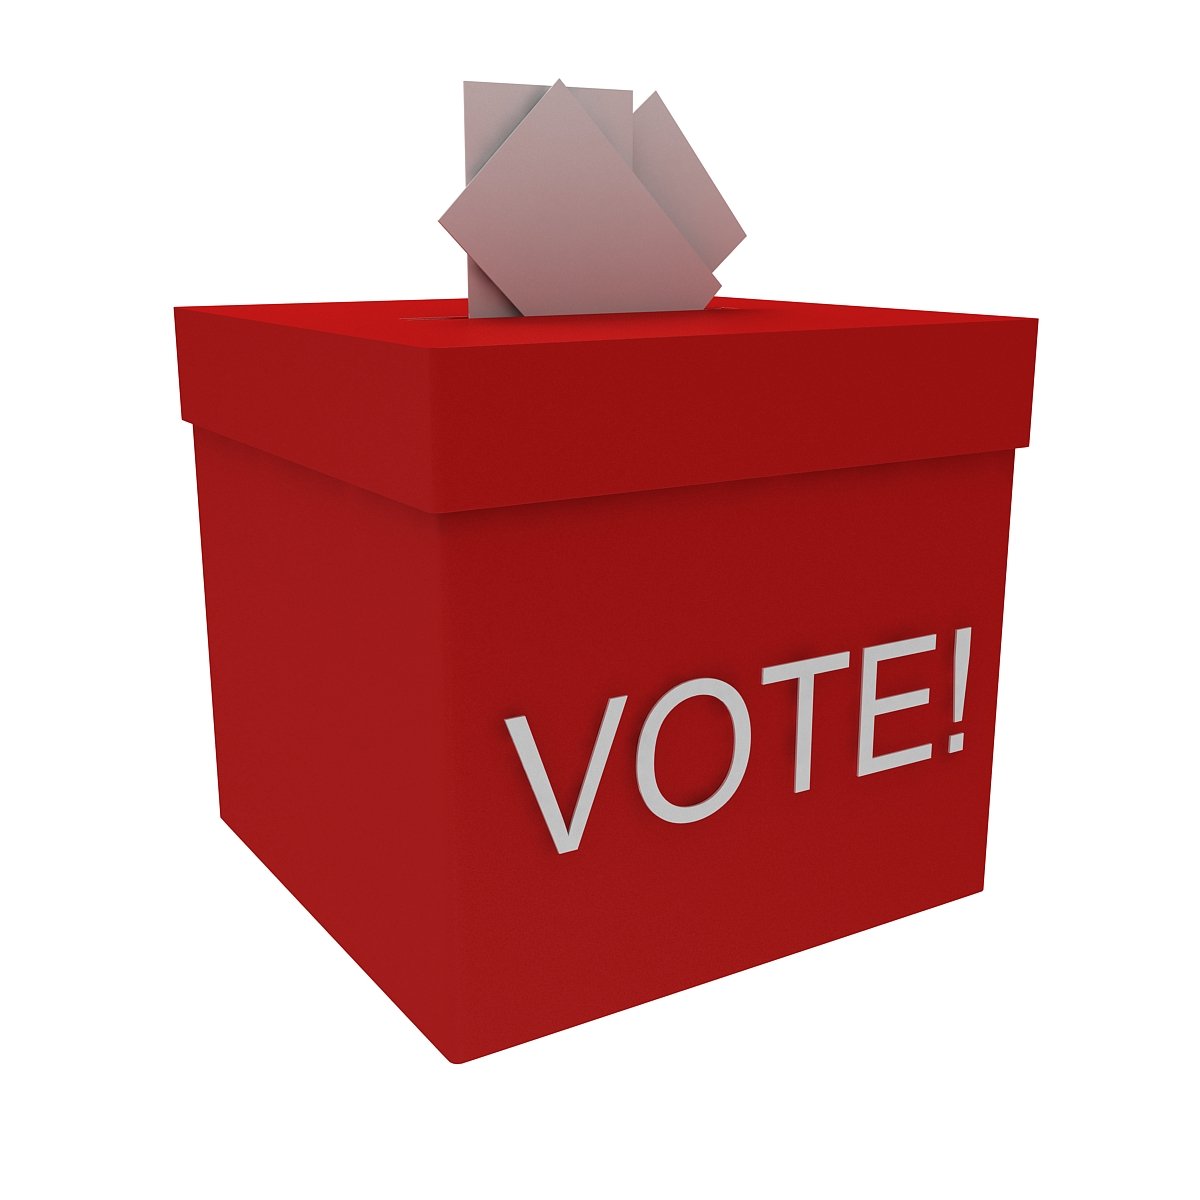 D vote. Voting Box. Коробка для голосования. Коробка 3d модель. Vote Box 3d.